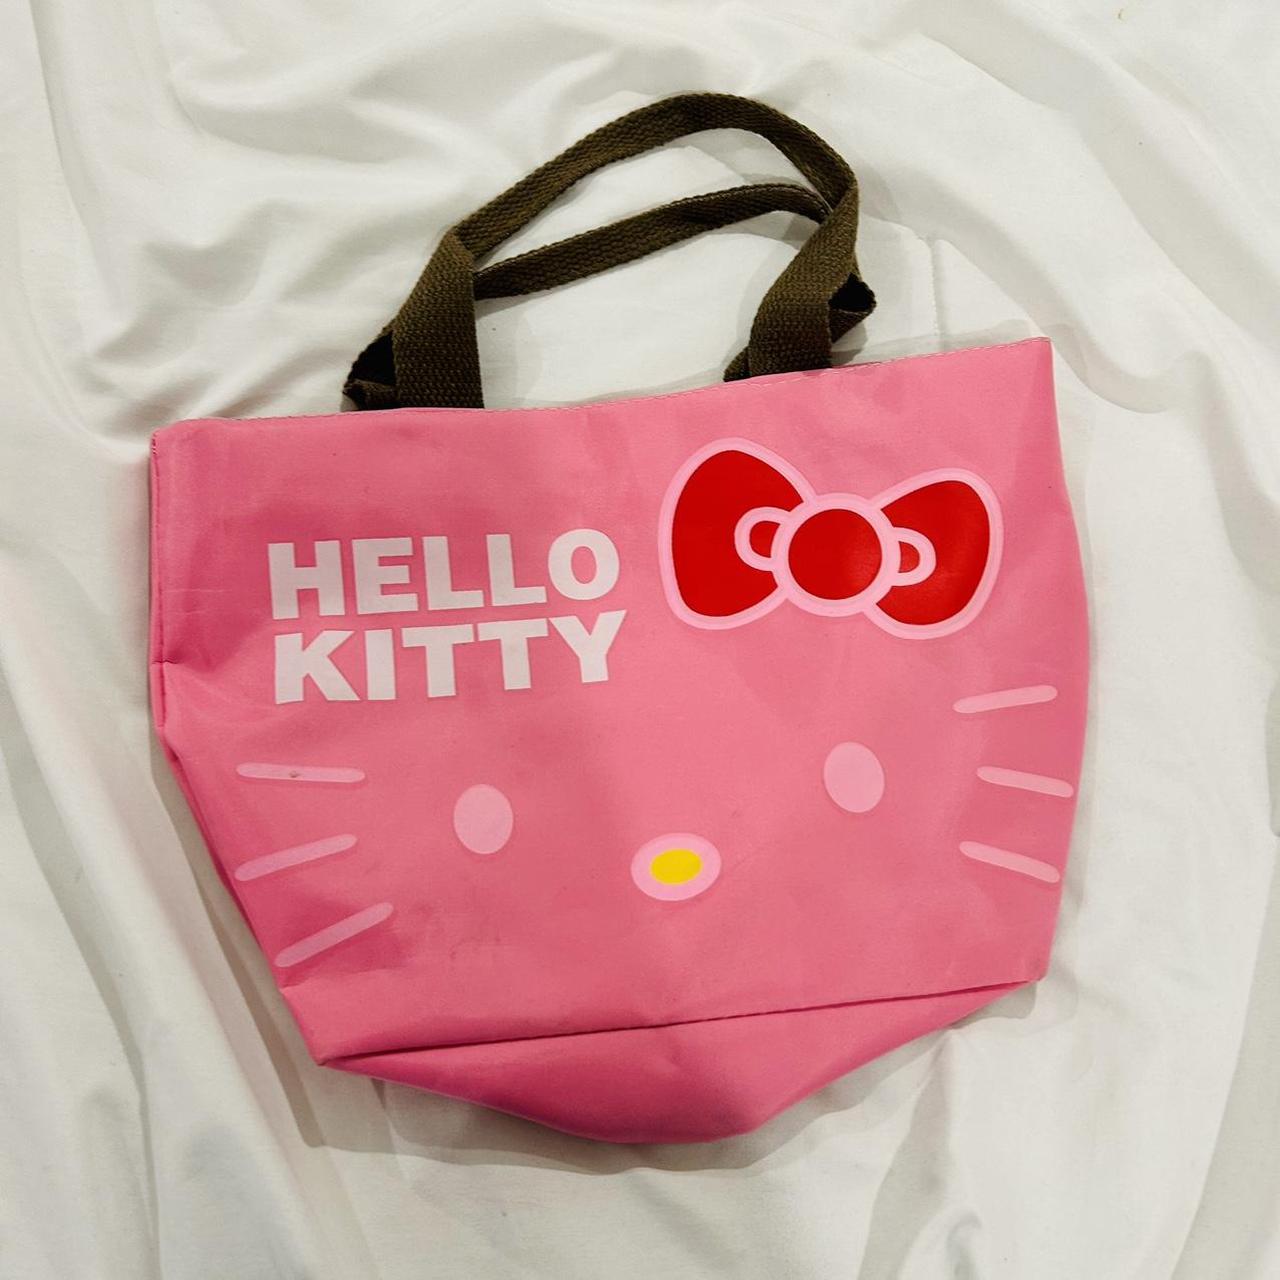 Sanrio Heisei Y2K Tote Bag – JapanLA